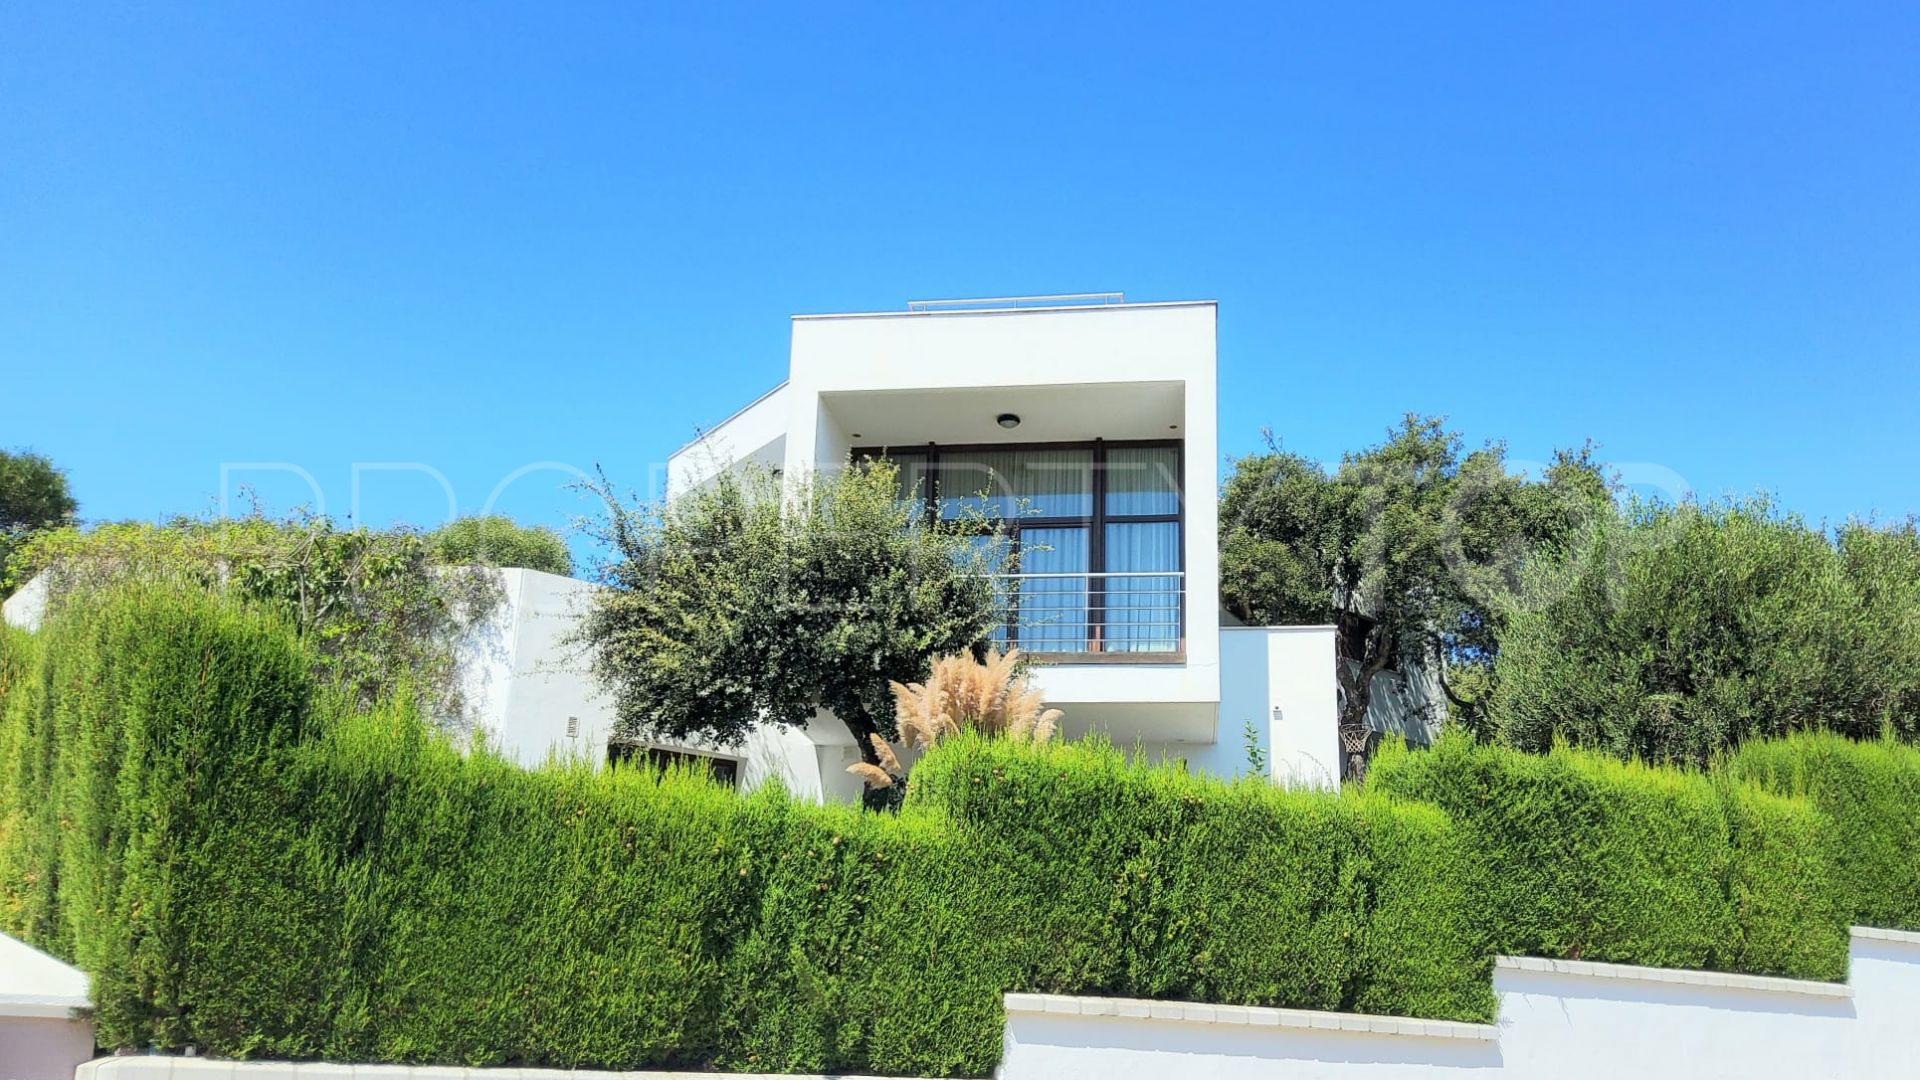 4 bedrooms villa in Torreguadiaro for sale